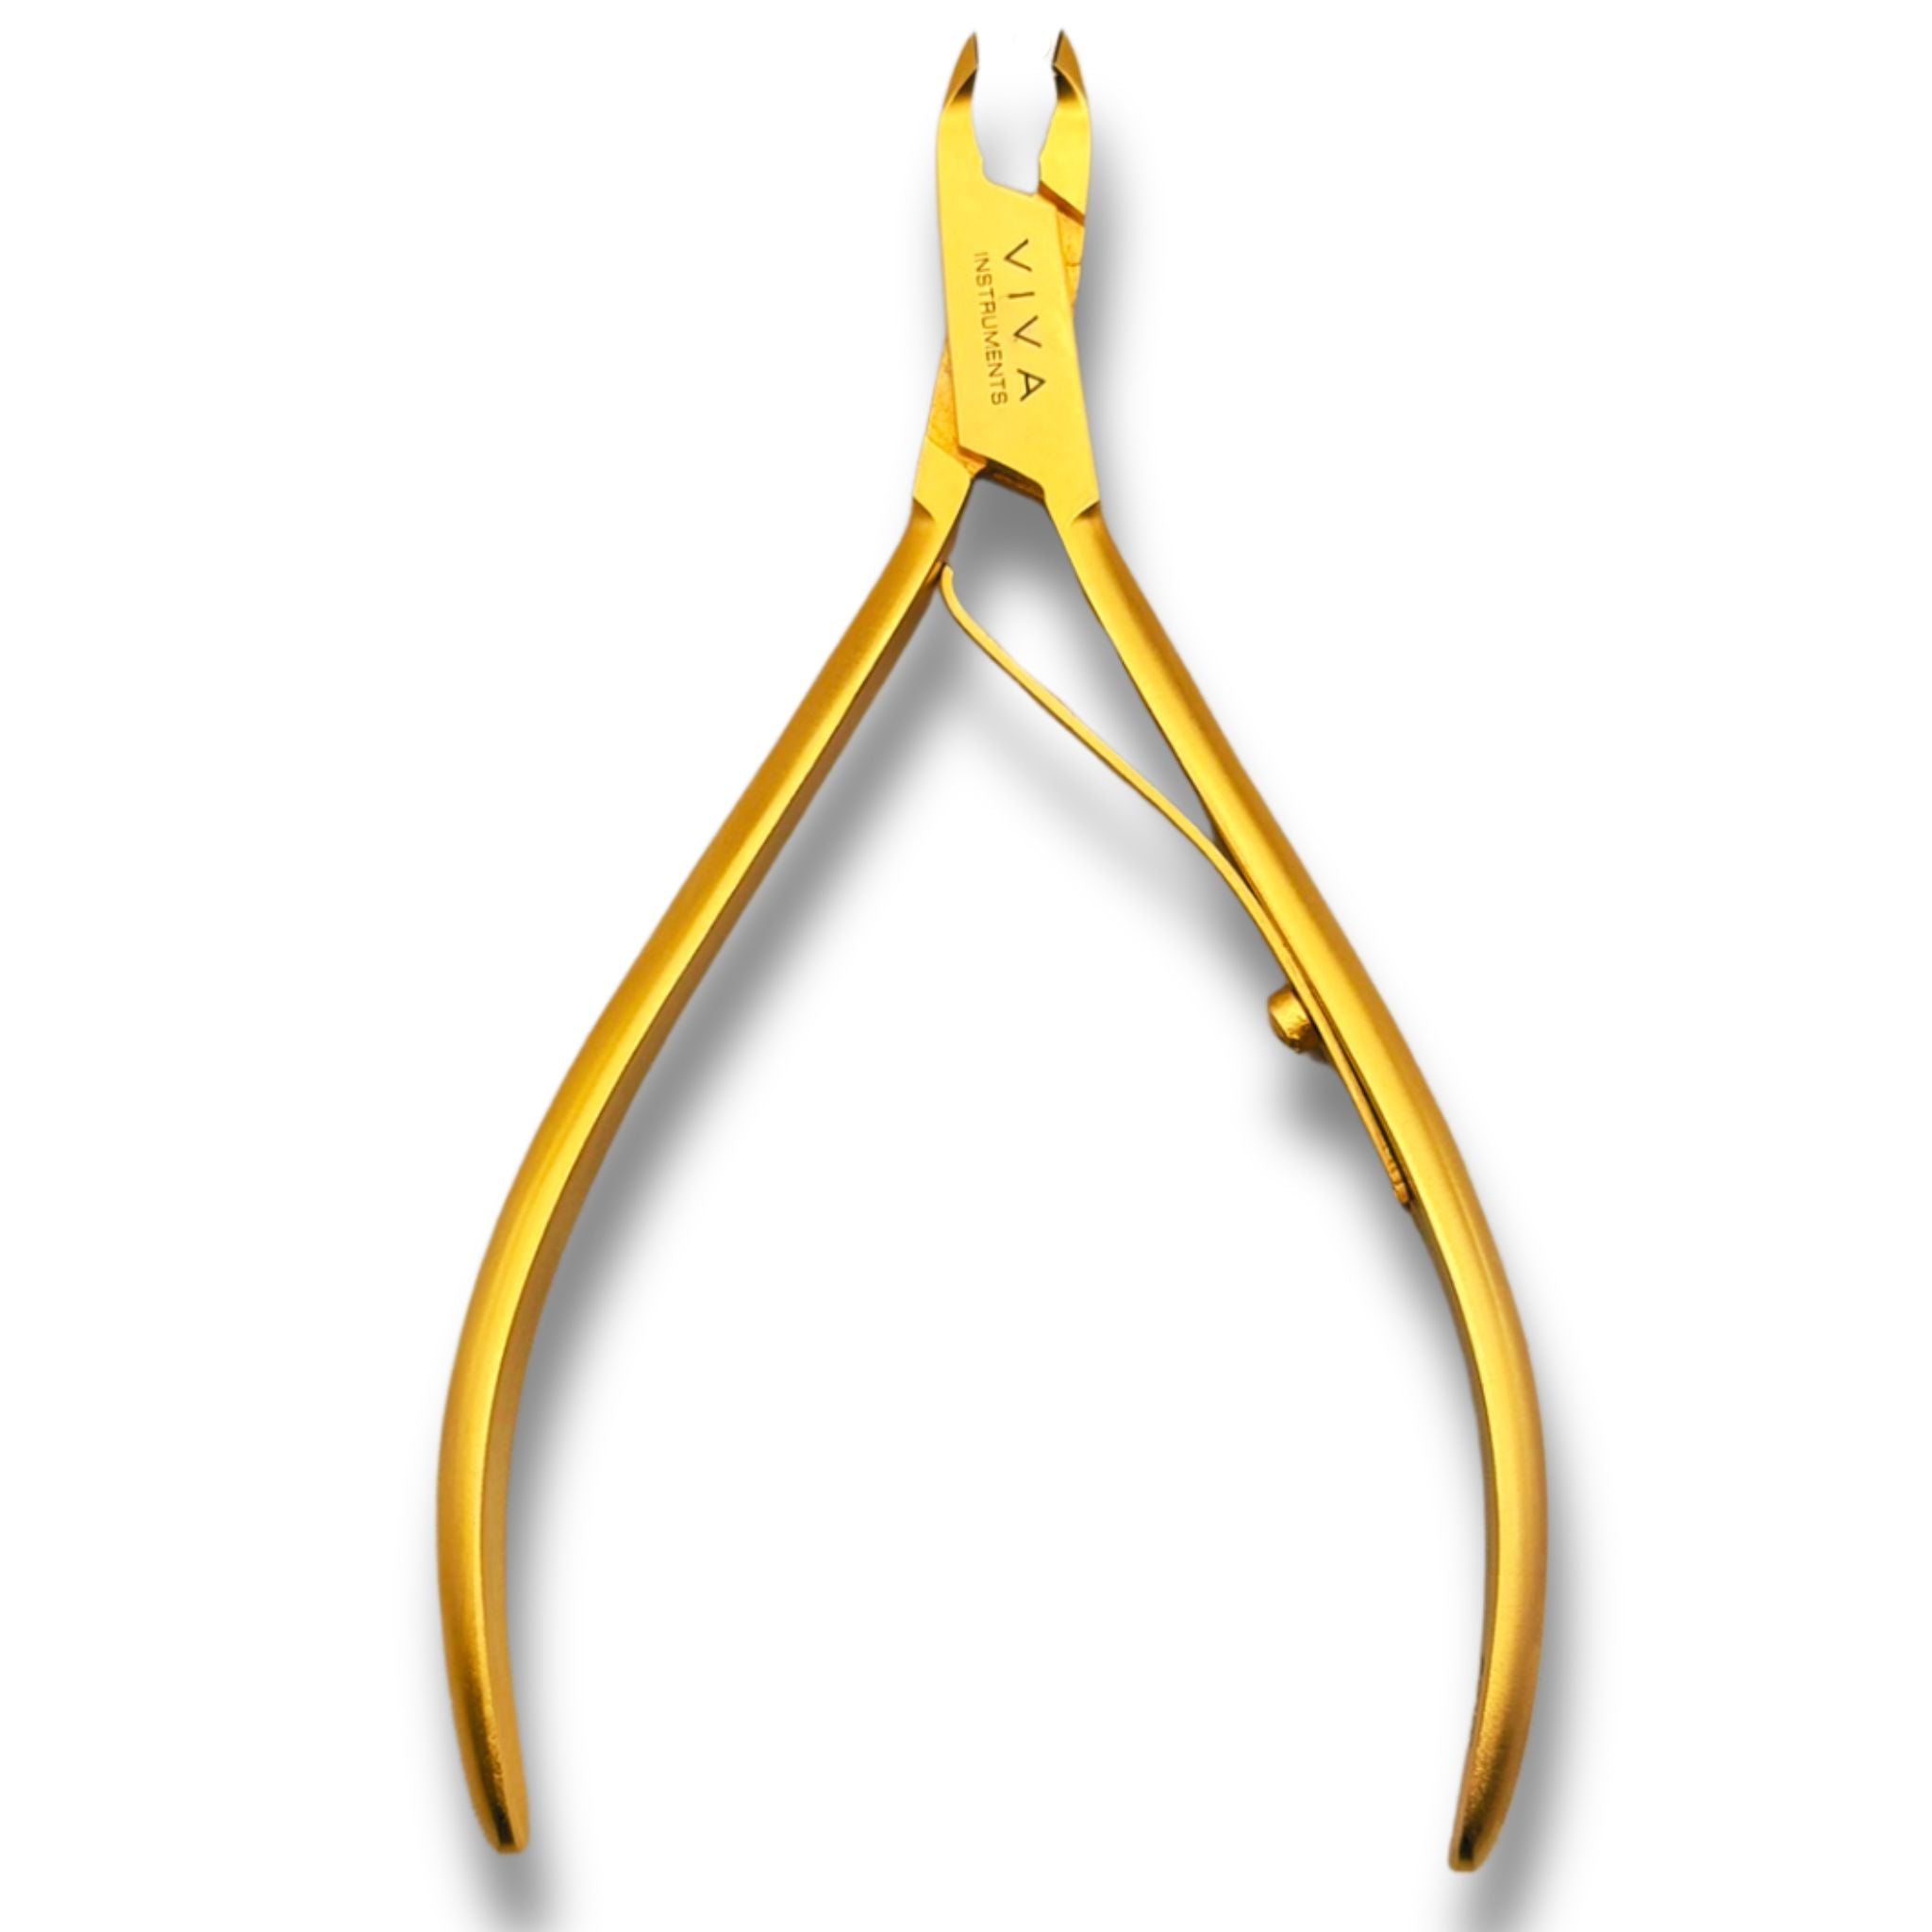 cuticle nipper cutter trimmer gold finish - viva instruments